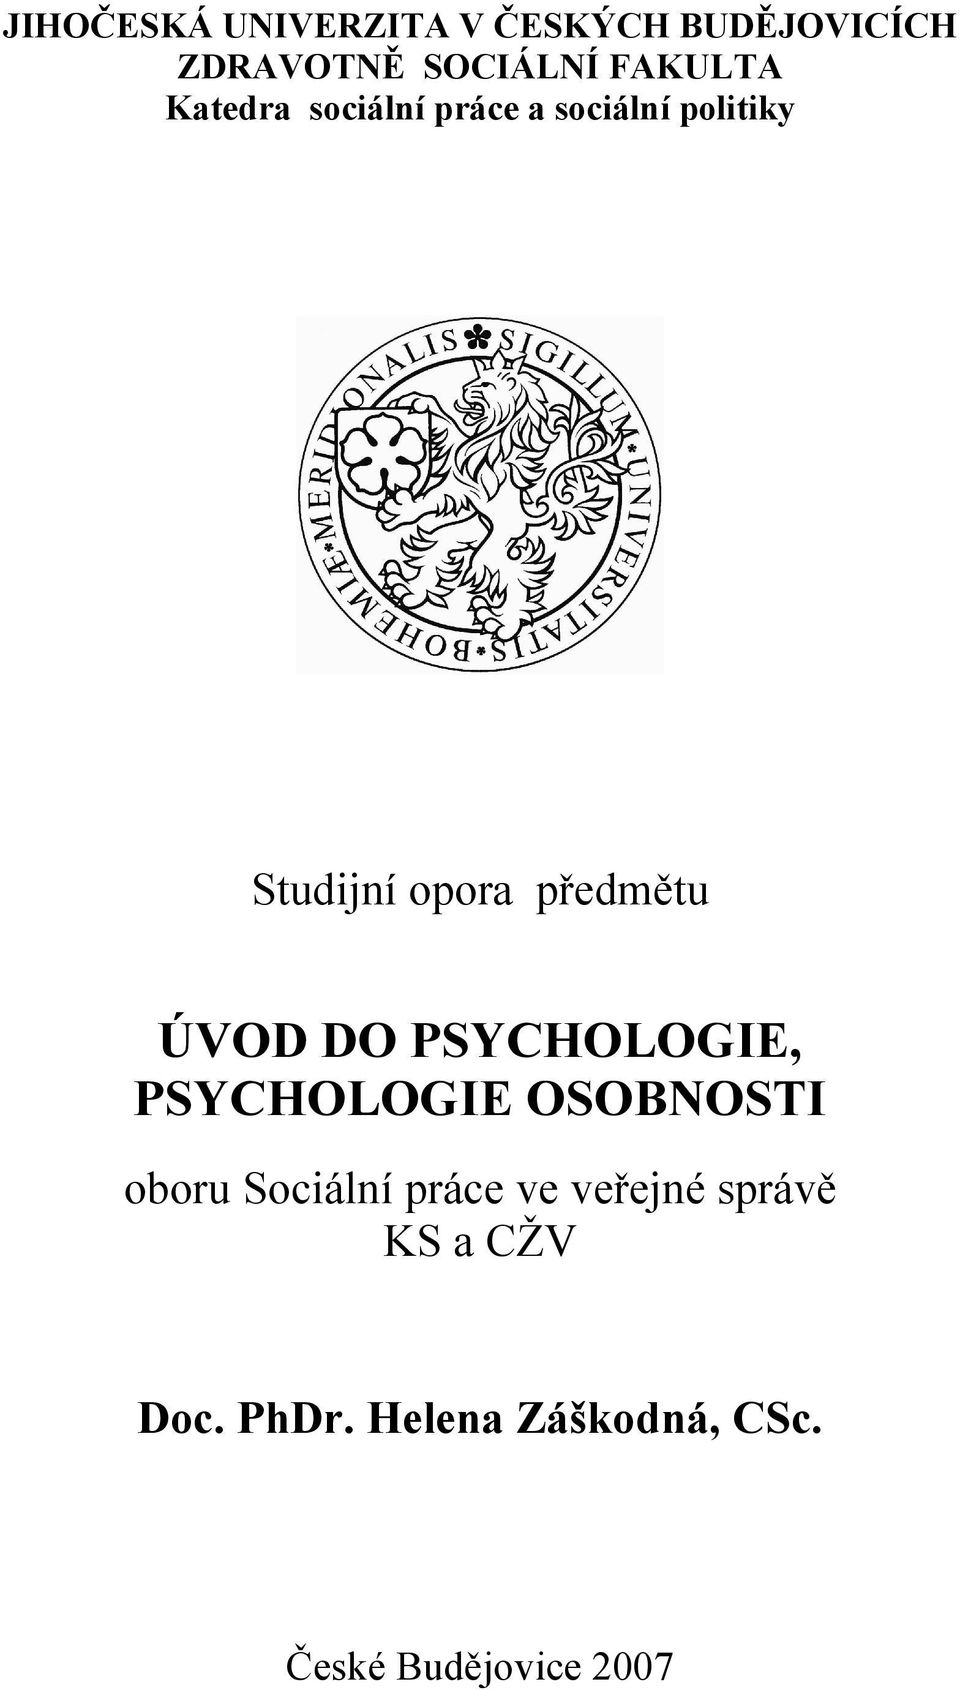 ÚVOD DO PSYCHOLOGIE, PSYCHOLOGIE OSOBNOSTI - PDF Free Download